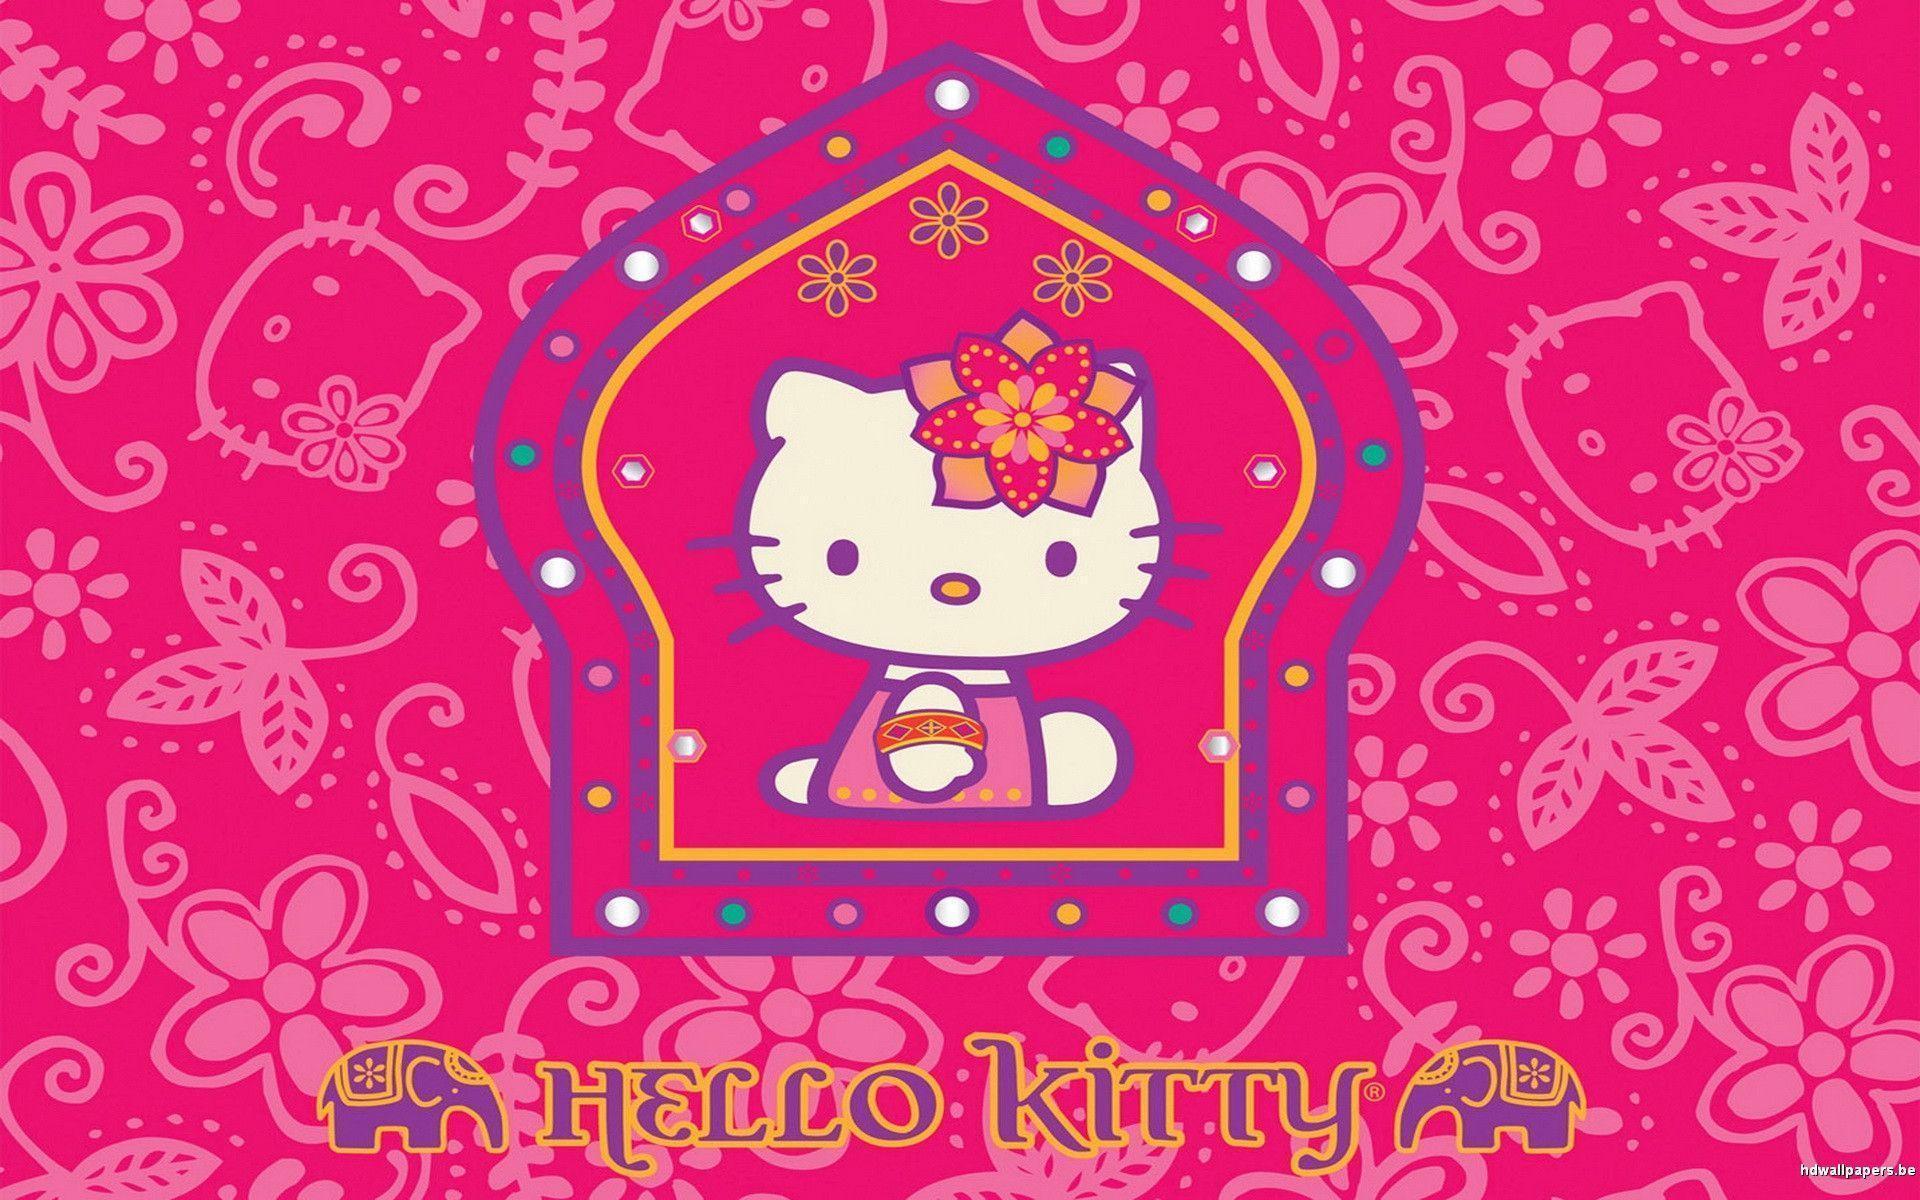 HD Wallpaper Hello Kitty